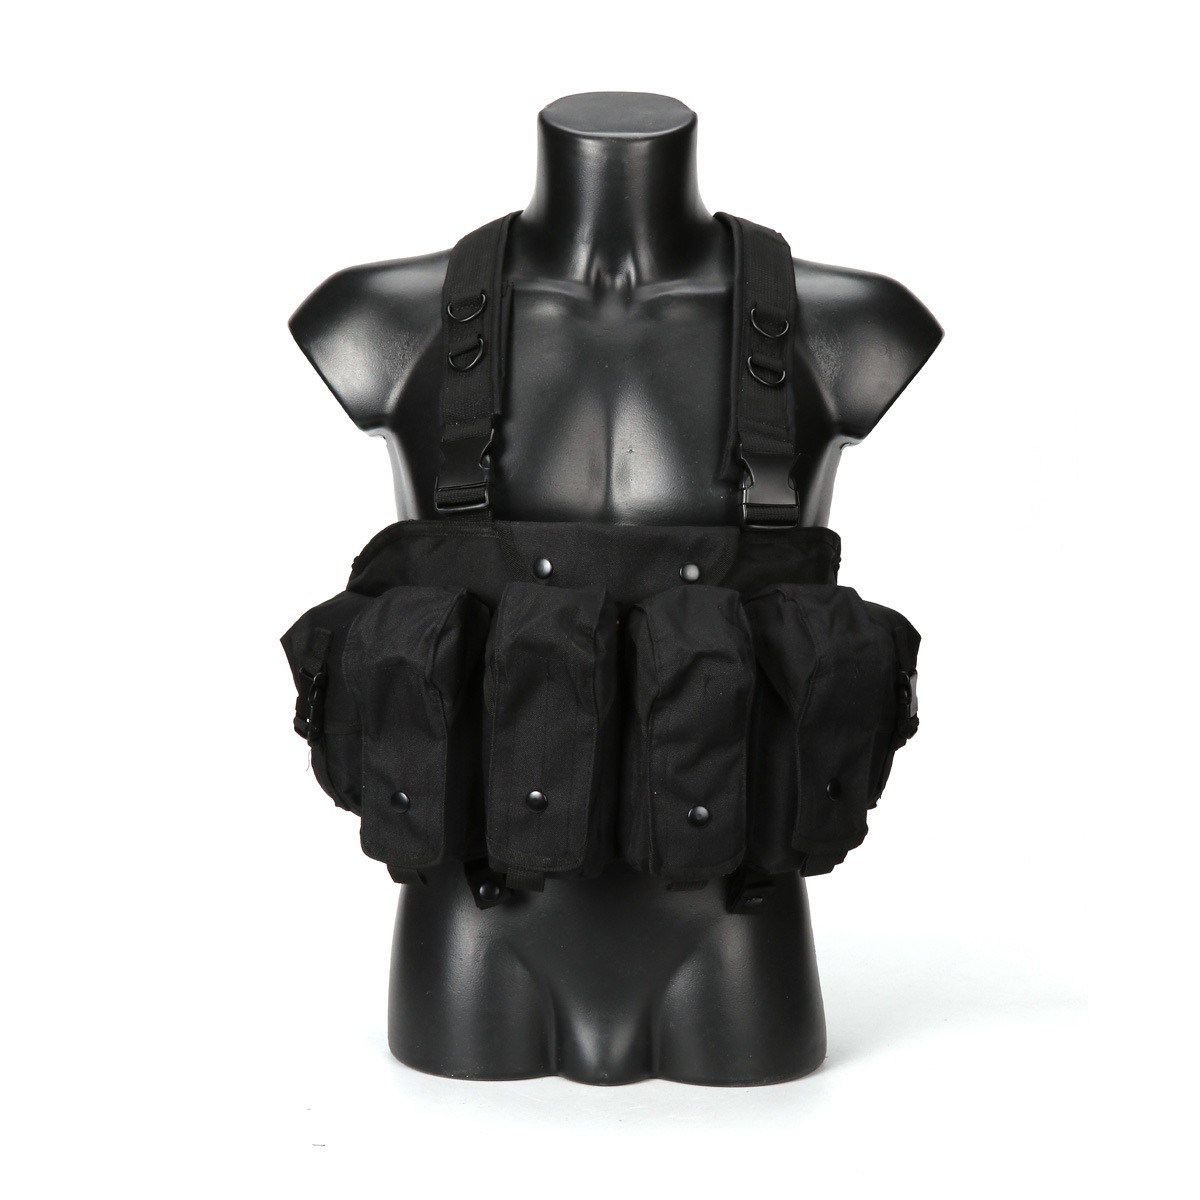 Tactical Vest Military Cavalar Wholesale Body Vest Tactical Waterproof Military Tactical Vest